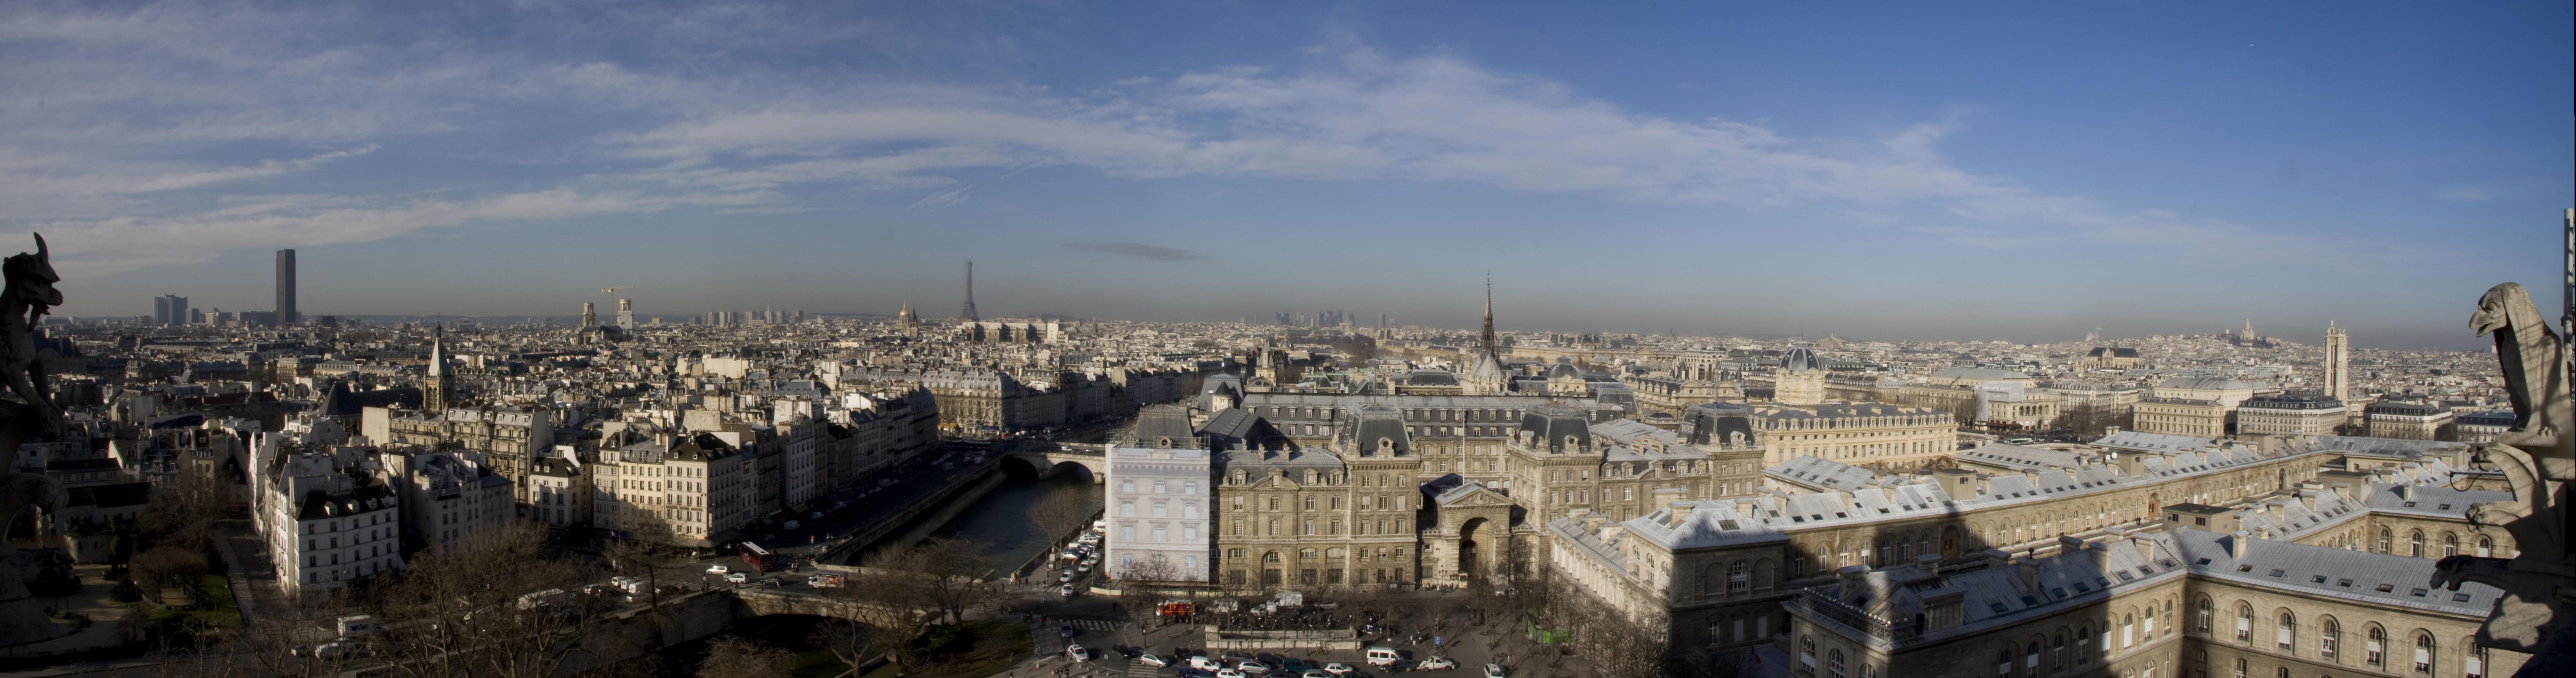 Париж панорама 1540